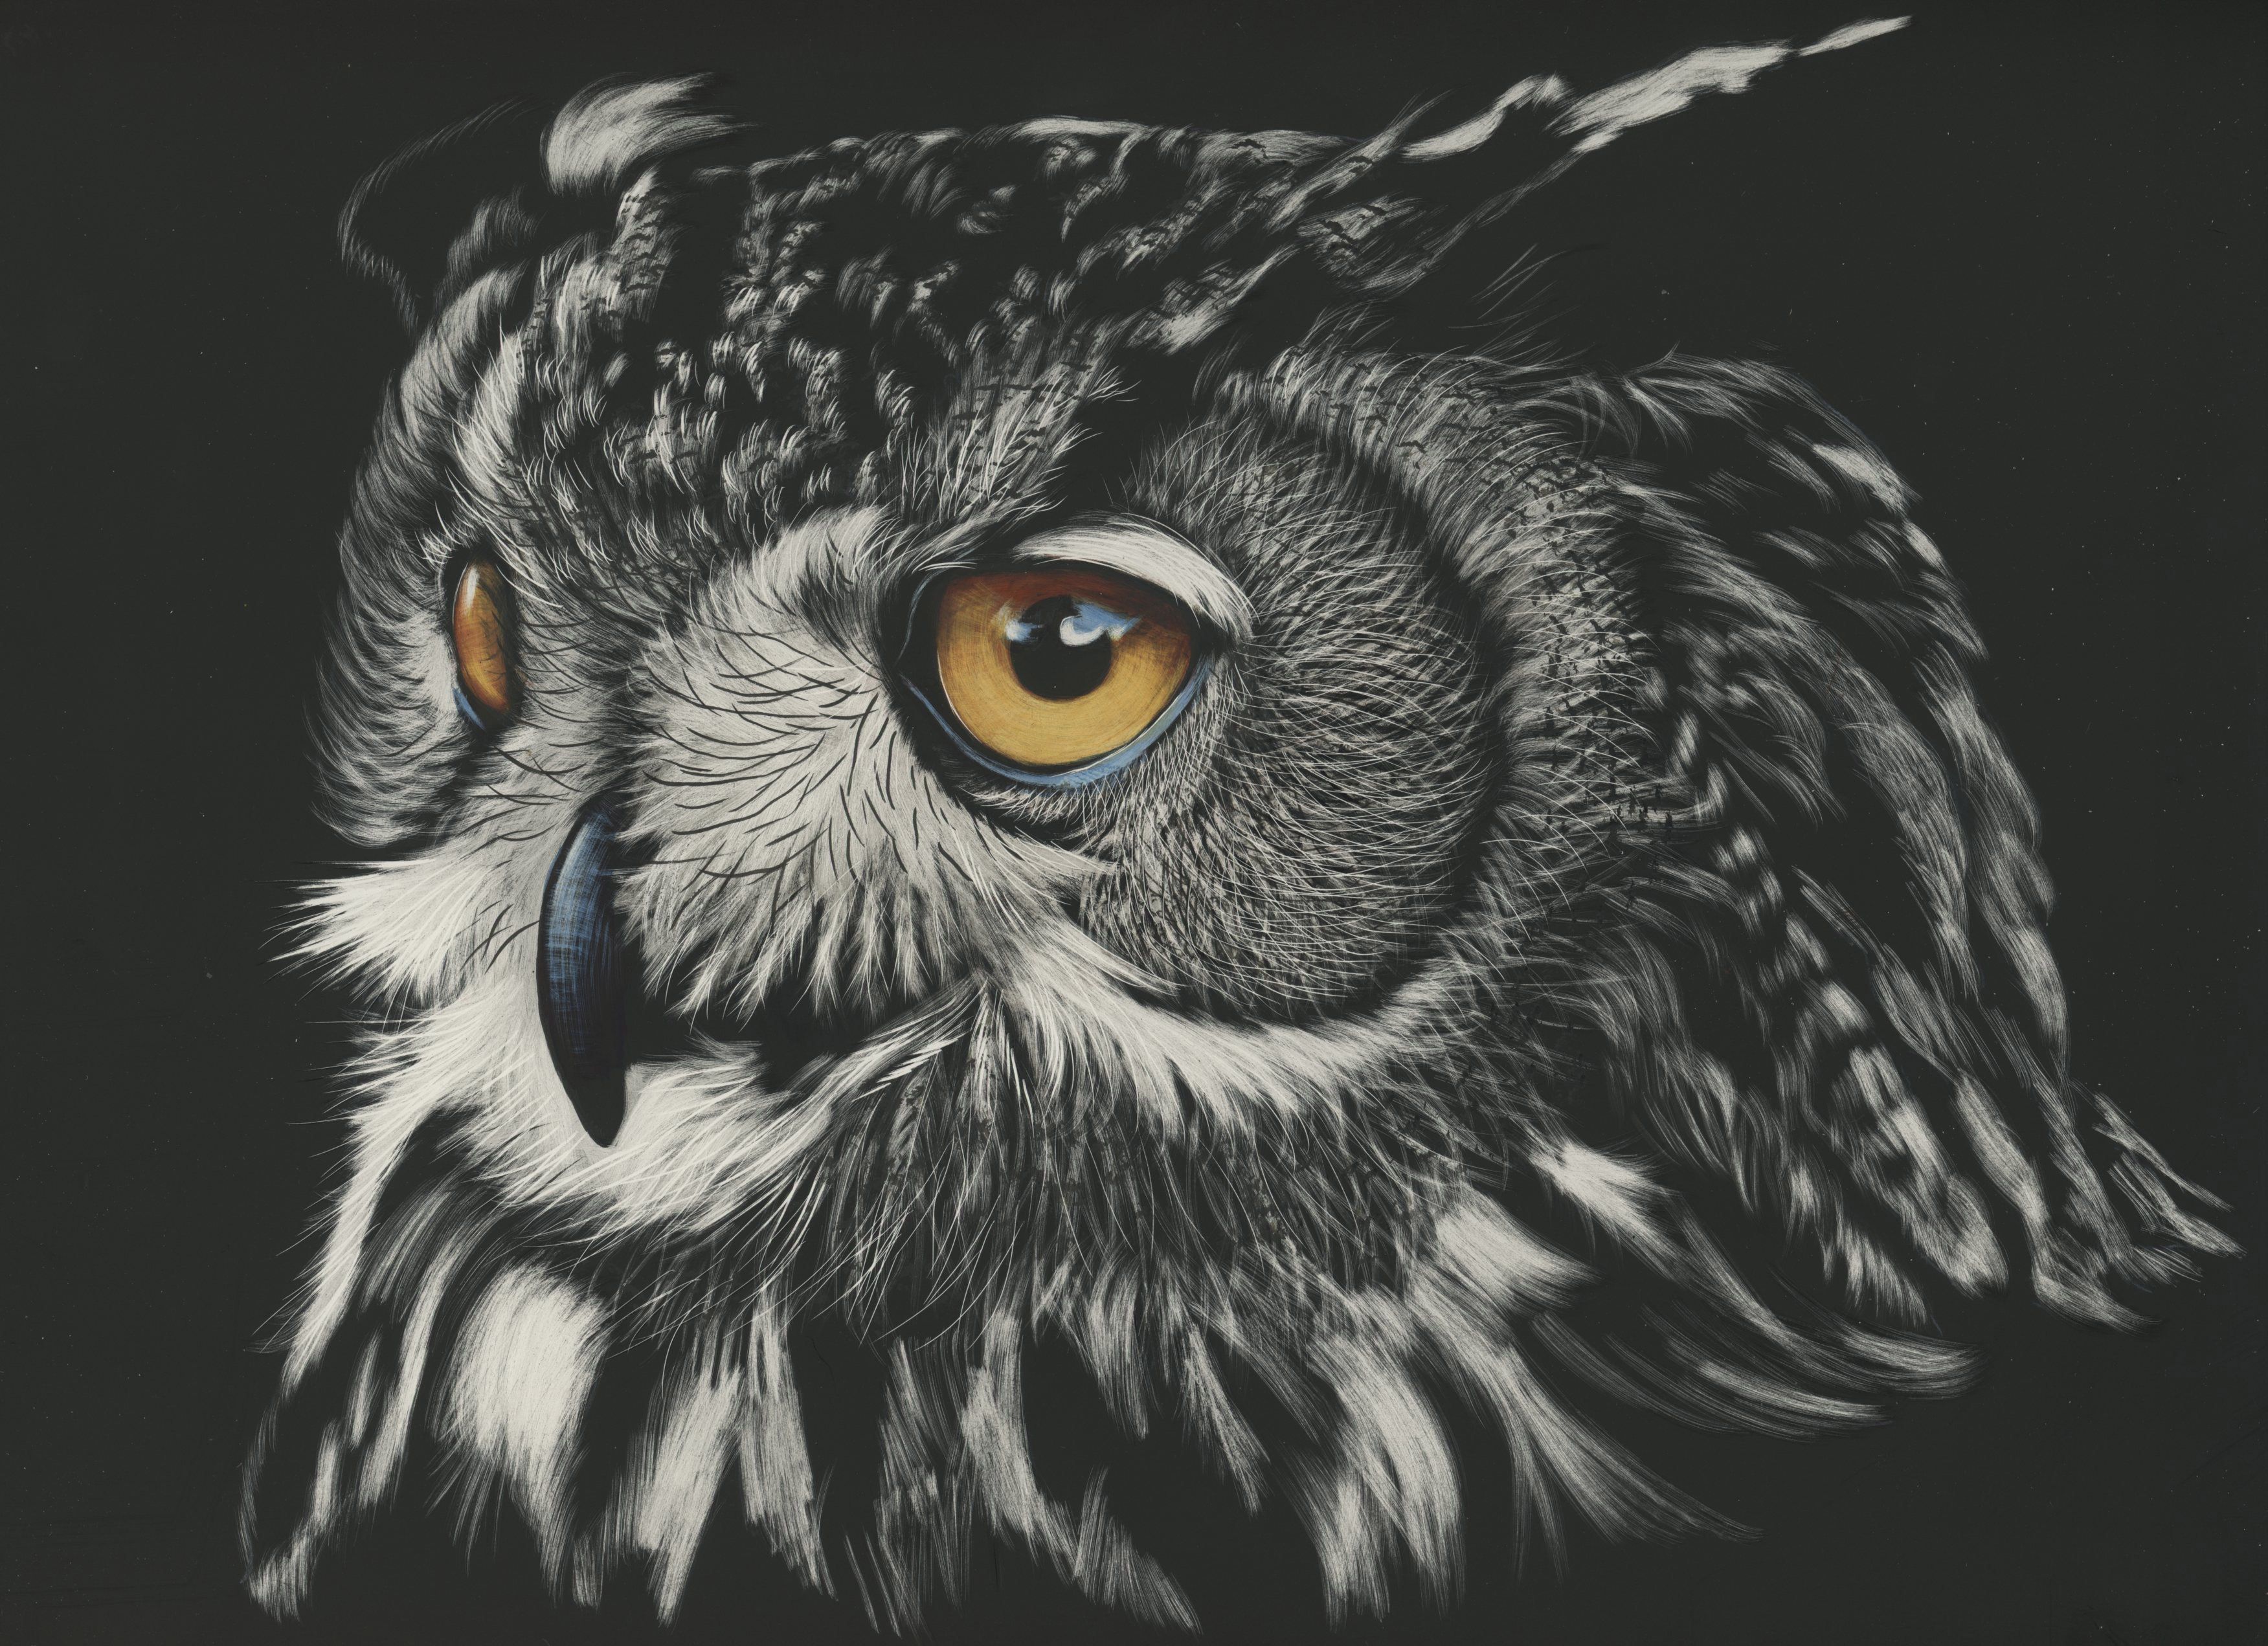 Animal Owl 4k Ultra HD Wallpaper